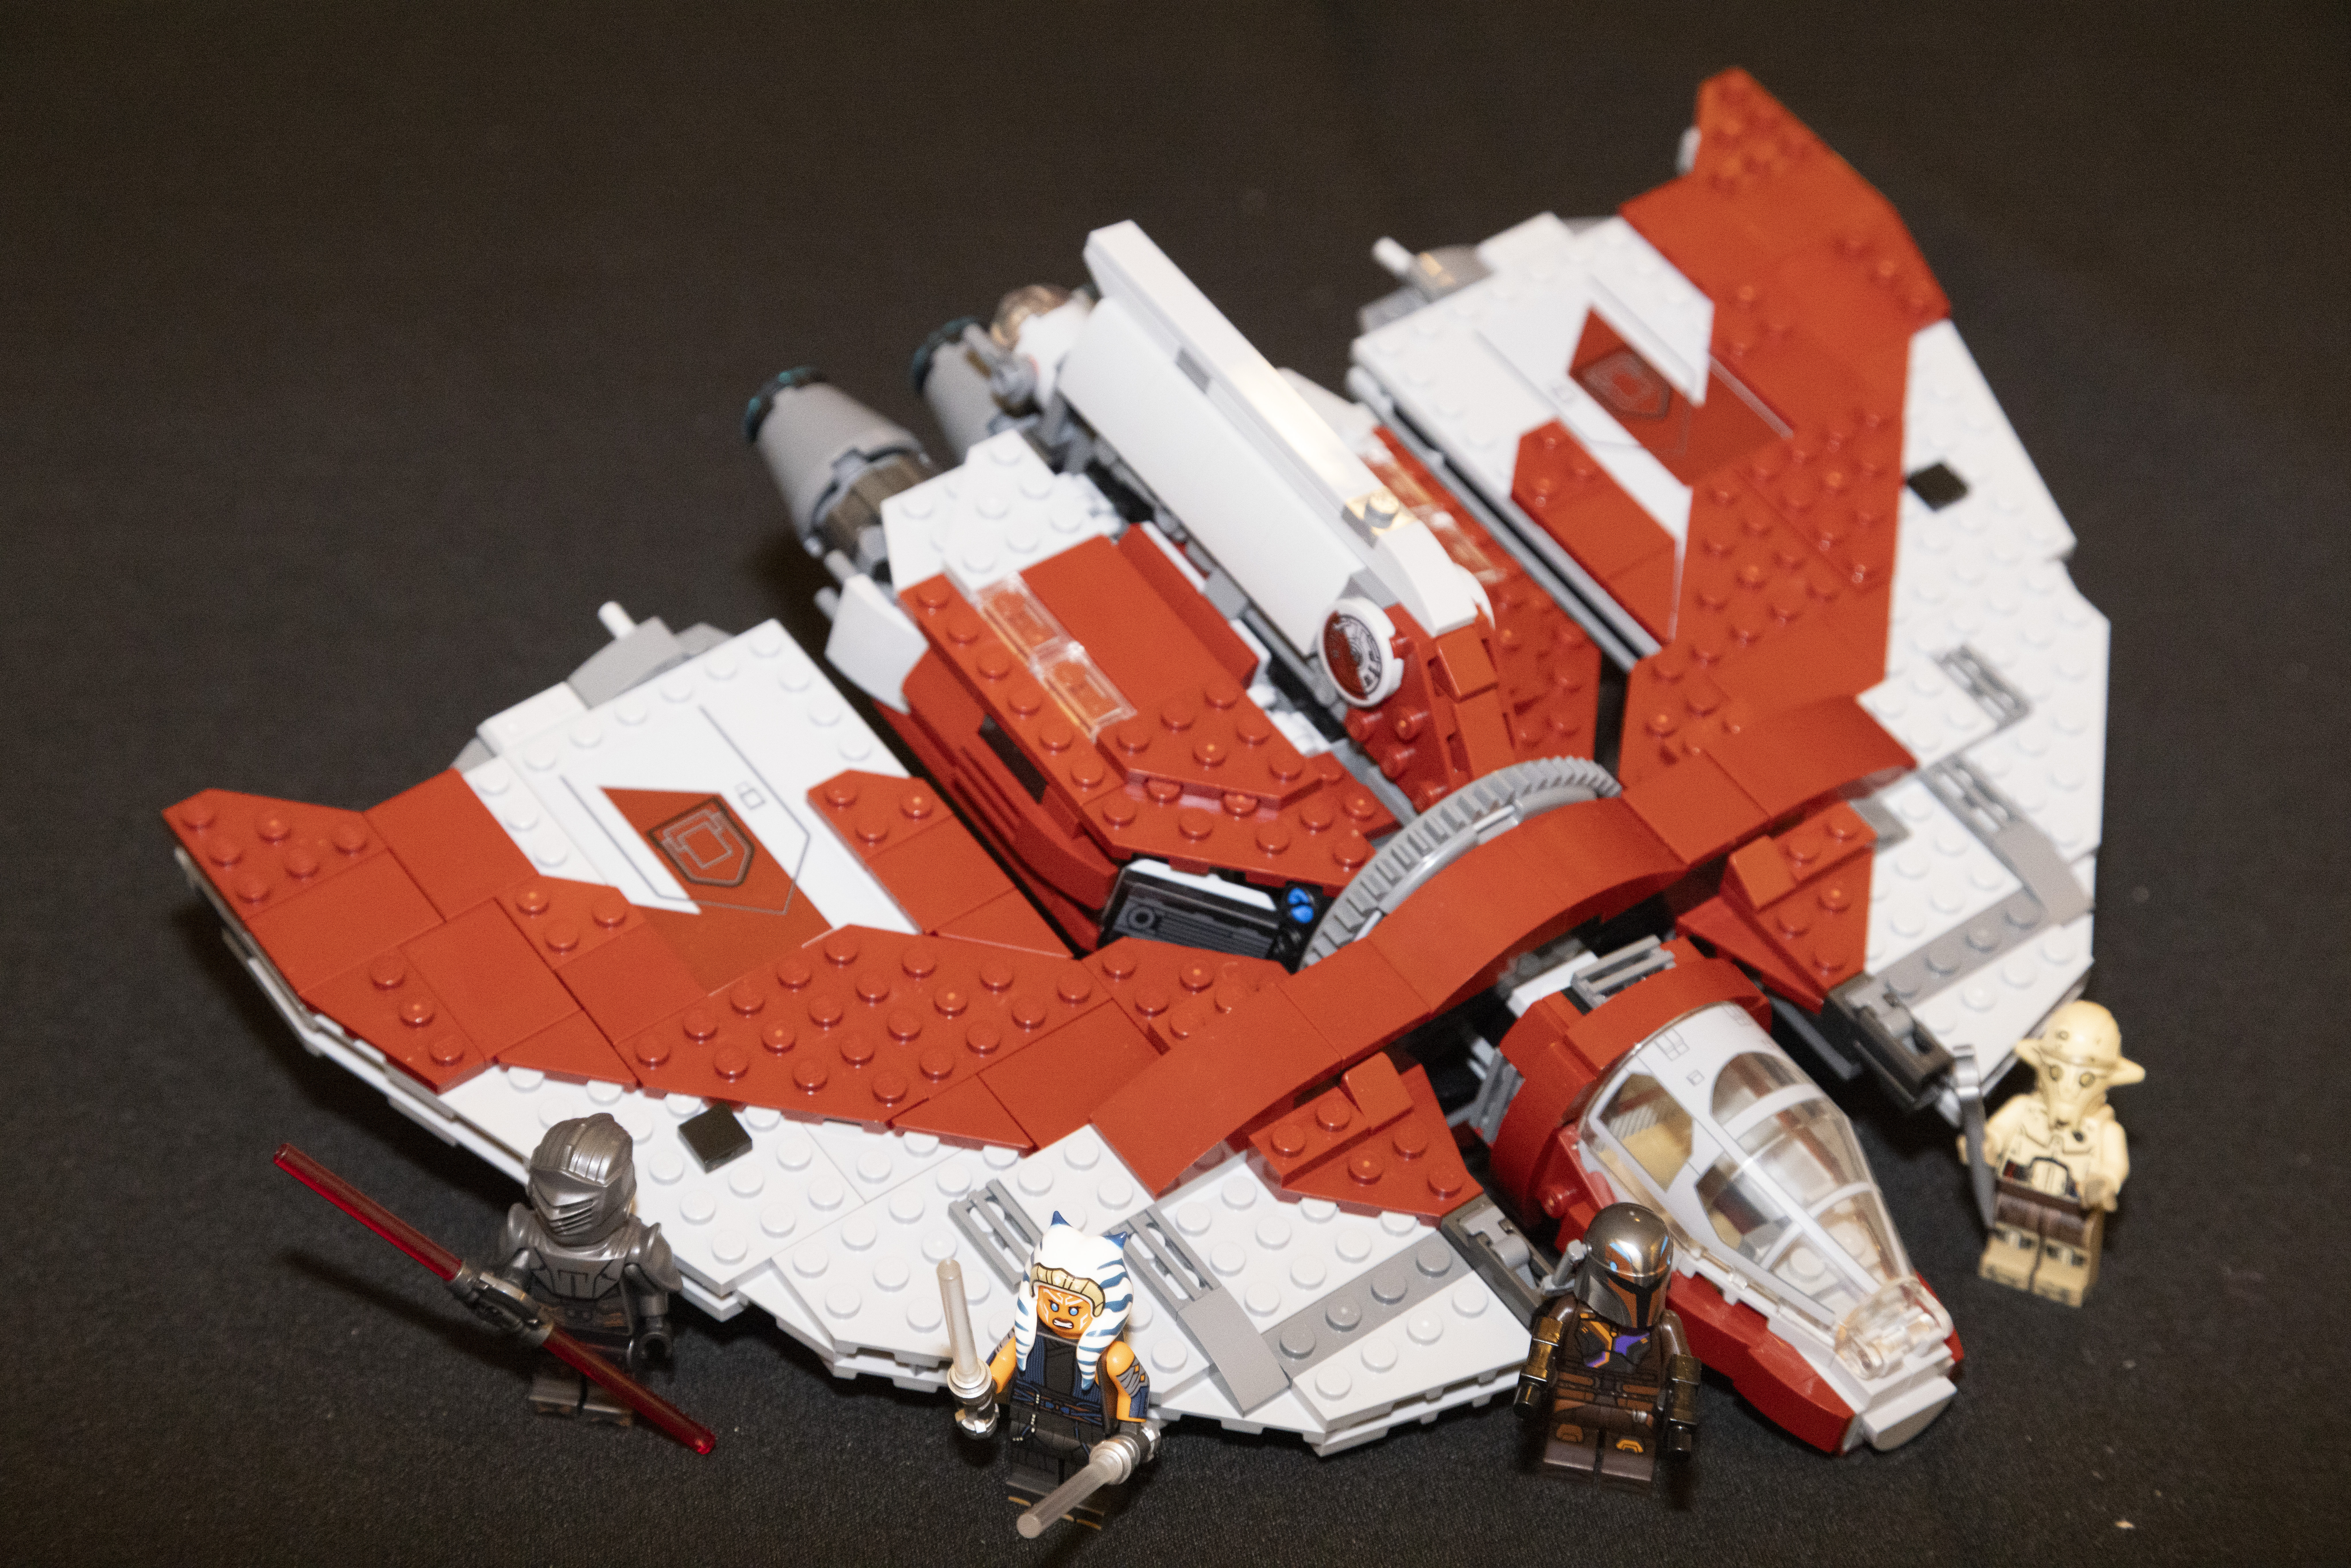 LEGO Star Wars Ahsoka Raumschiff kostet 64,99 £